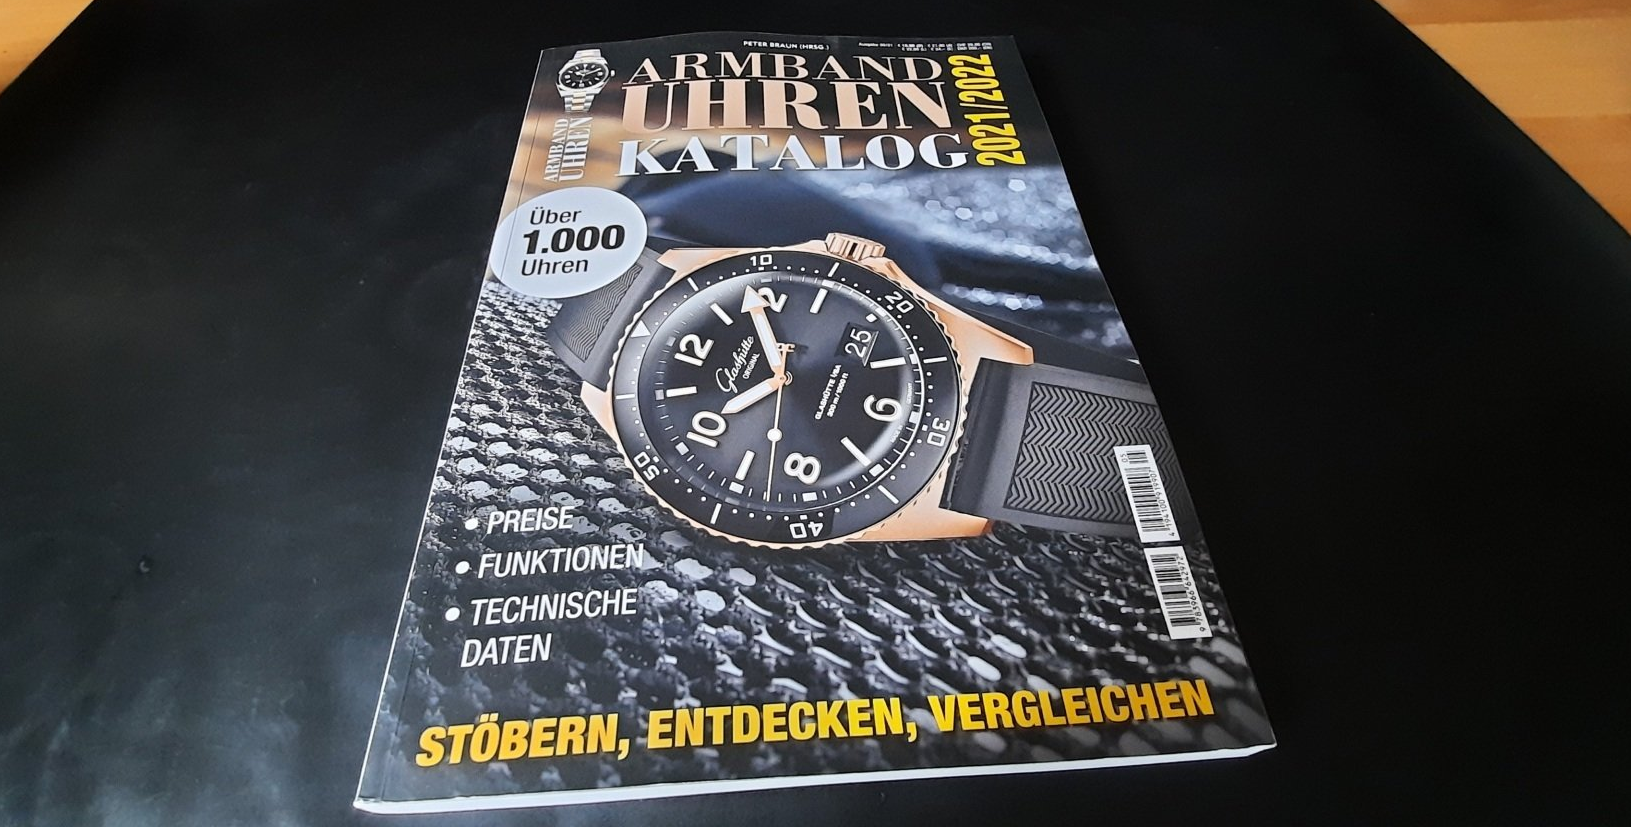 Armbanduhren Katalog 2021